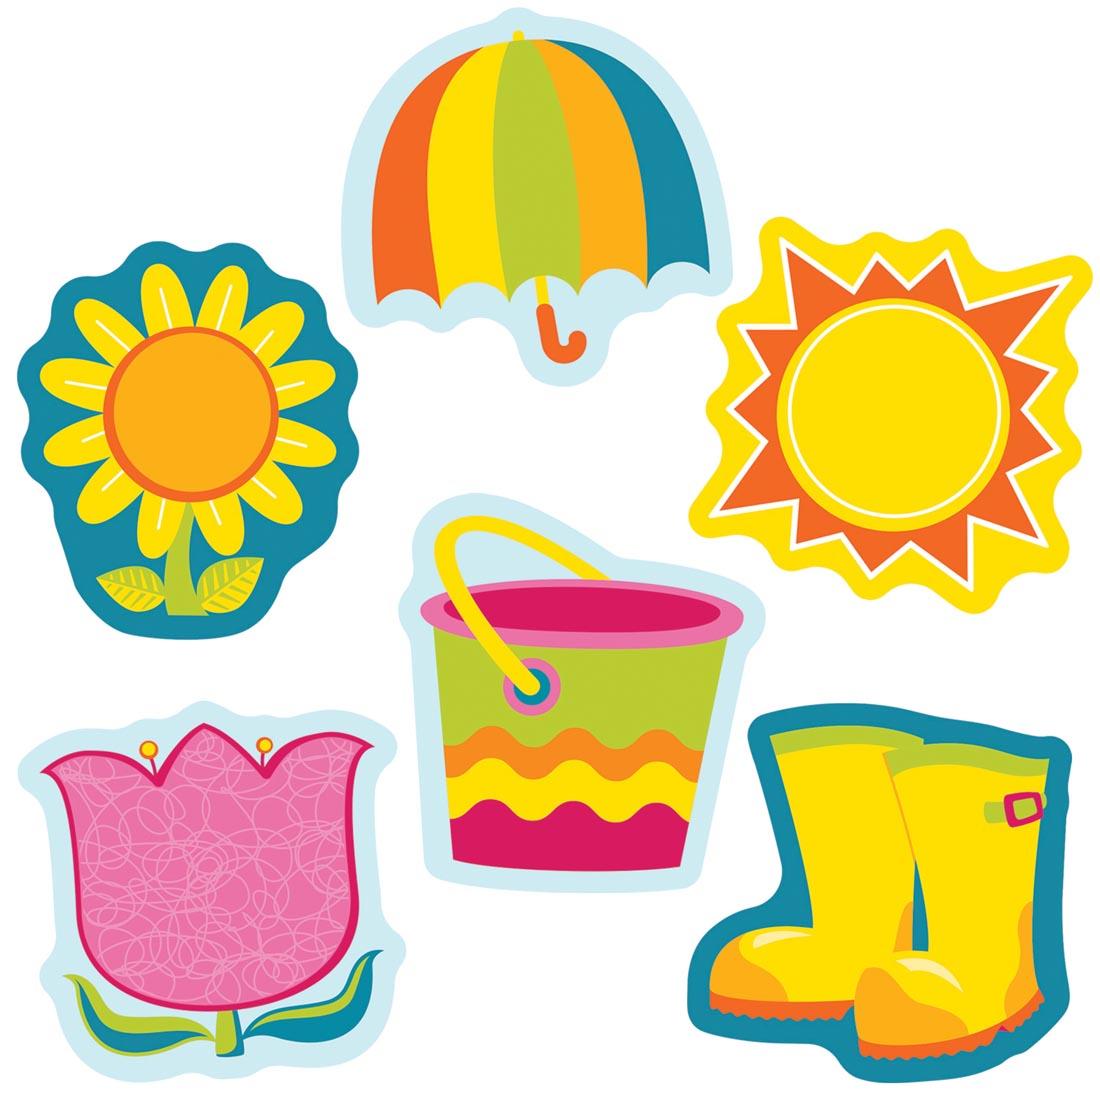 Umbrella, Sun, Bucket, Rain Boots and Flowers are part of the Spring Mix Mini Cut-Outs by Carson Dellosa